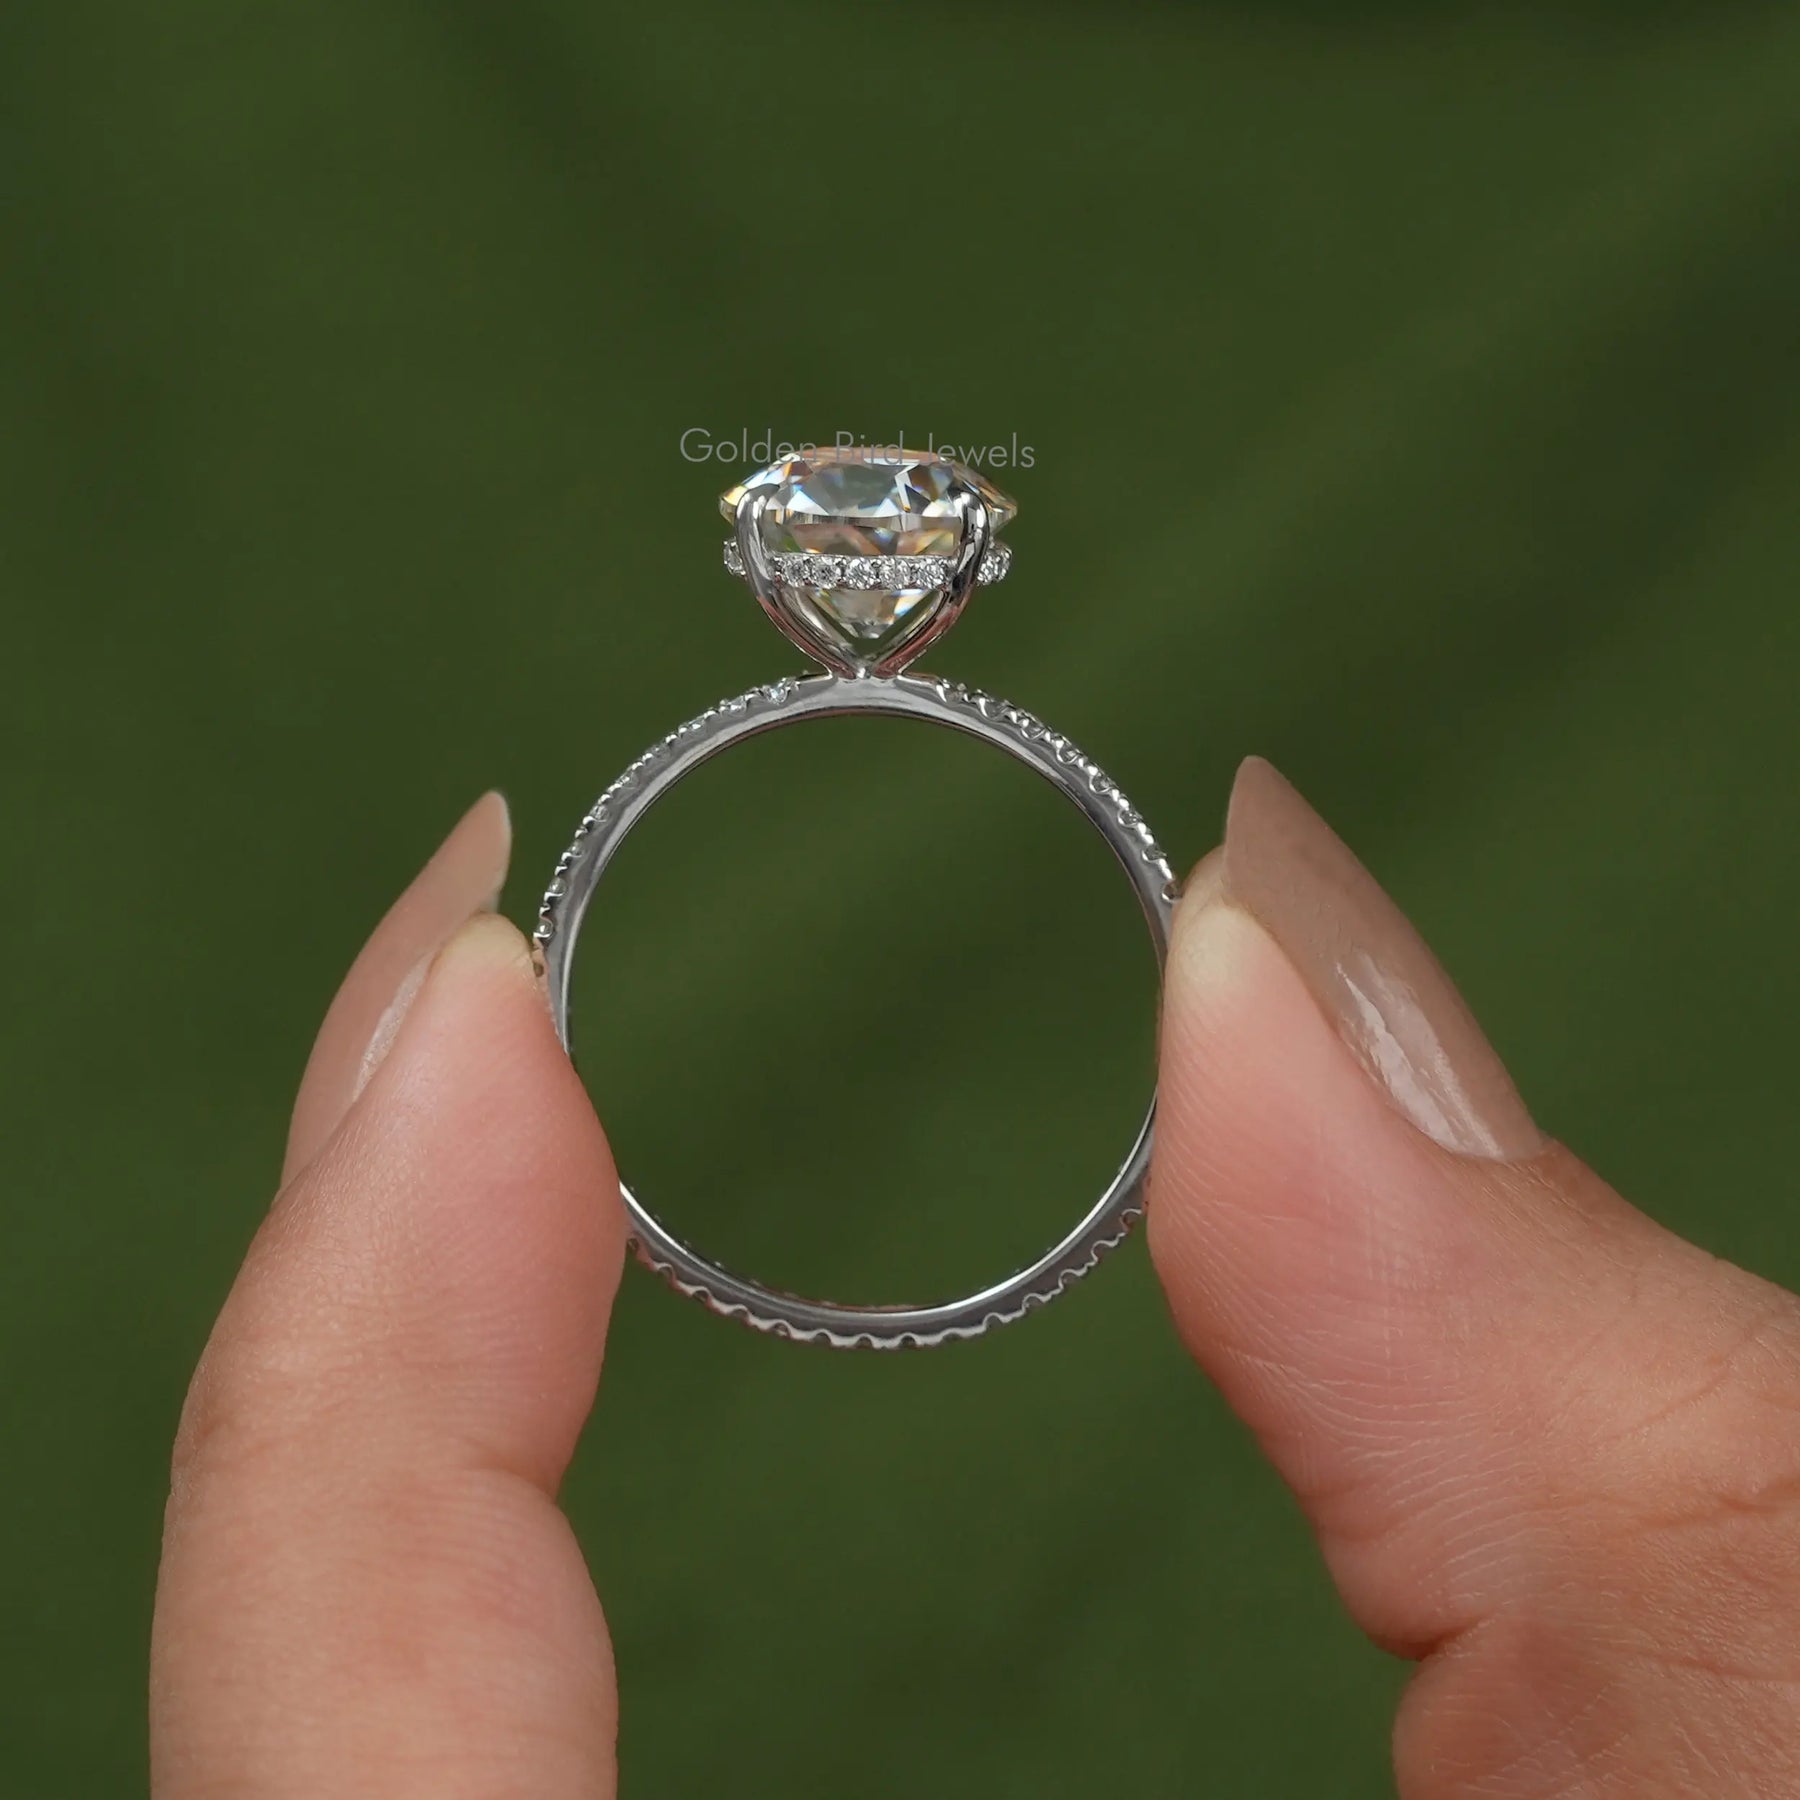 [This moissanite engagement ring set in hidden halo design]-[Golden Bird Jewels]